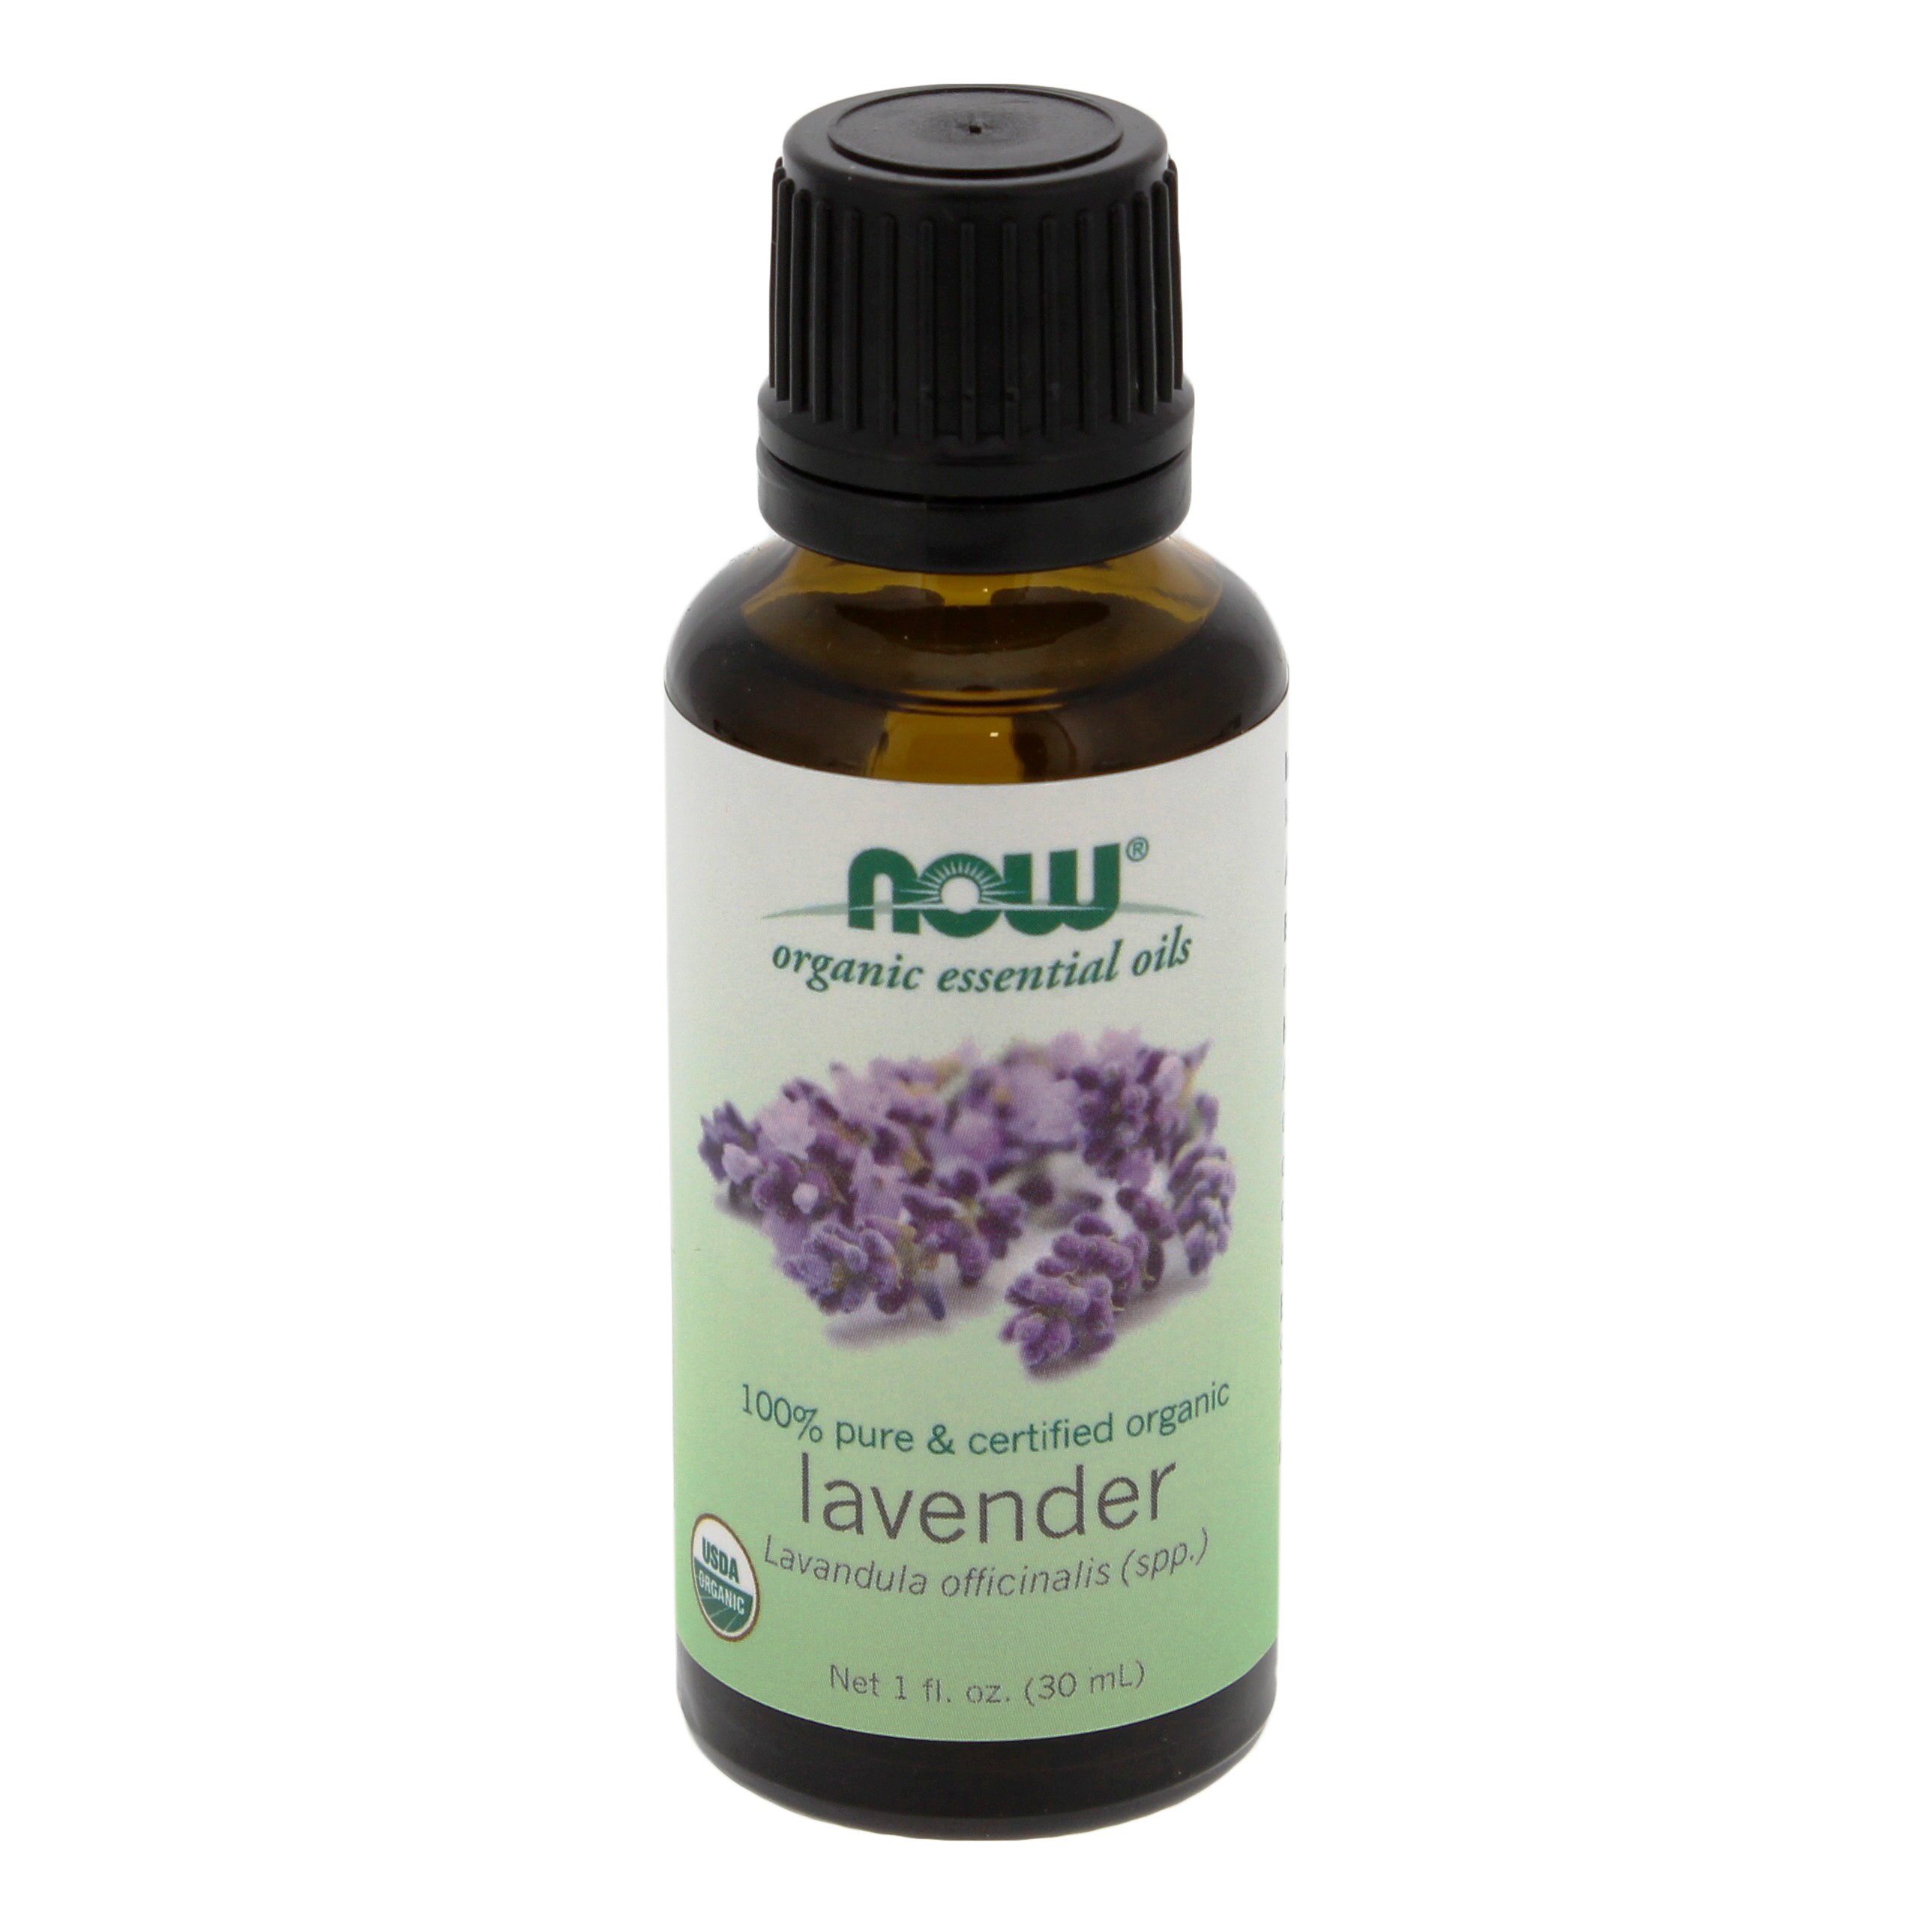 Organic Lavender Essential Oil for Diffuser (1 oz) - 100% Pure Natural  Lavender Oil, Steam Distilled